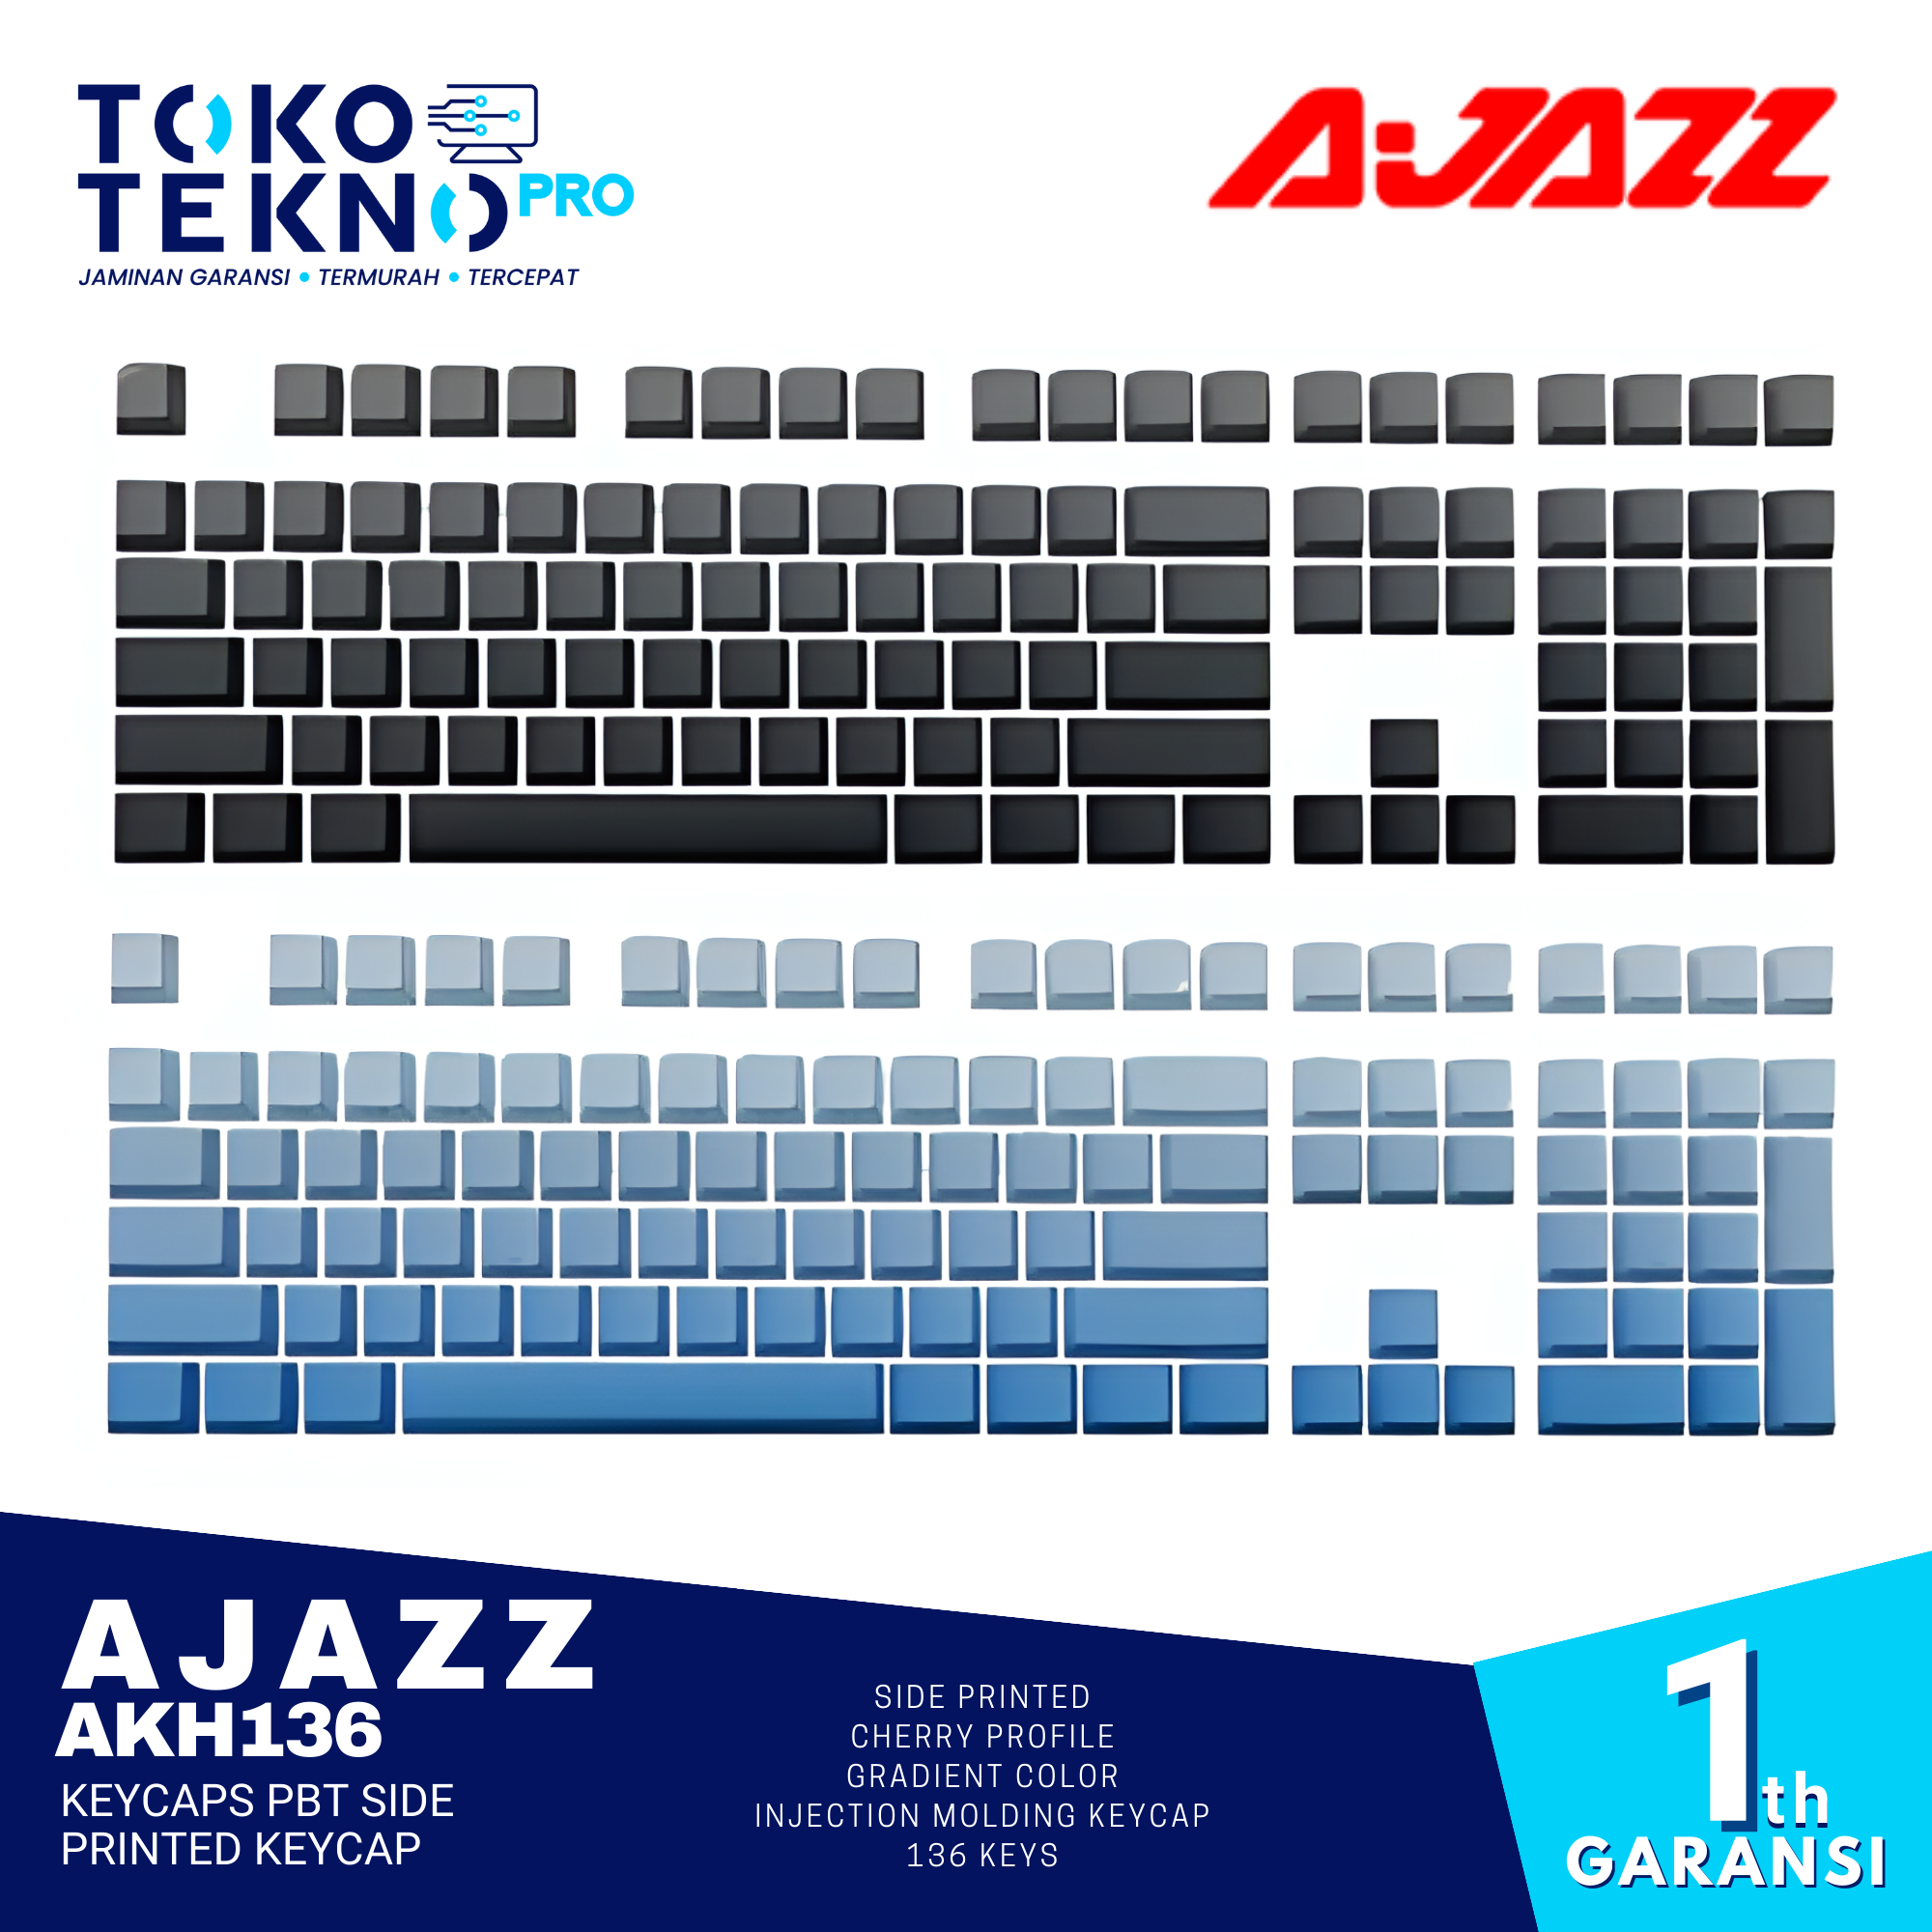 Ajazz AKH136 Keycaps PBT Side Printed Keycap